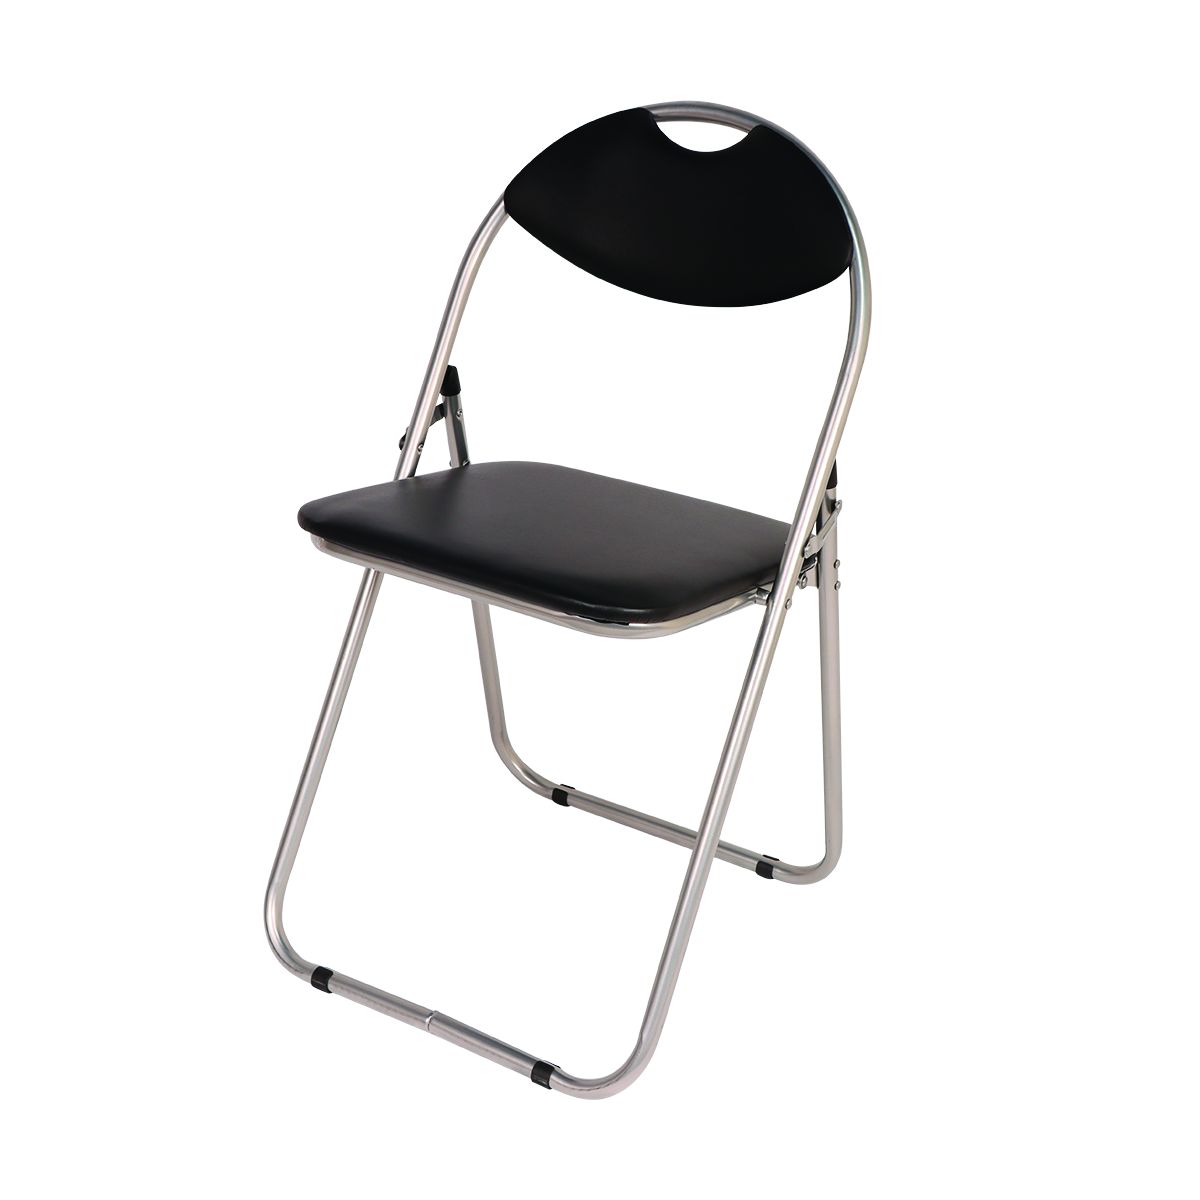 (6) Steel and polyurethane folding chair BLACK